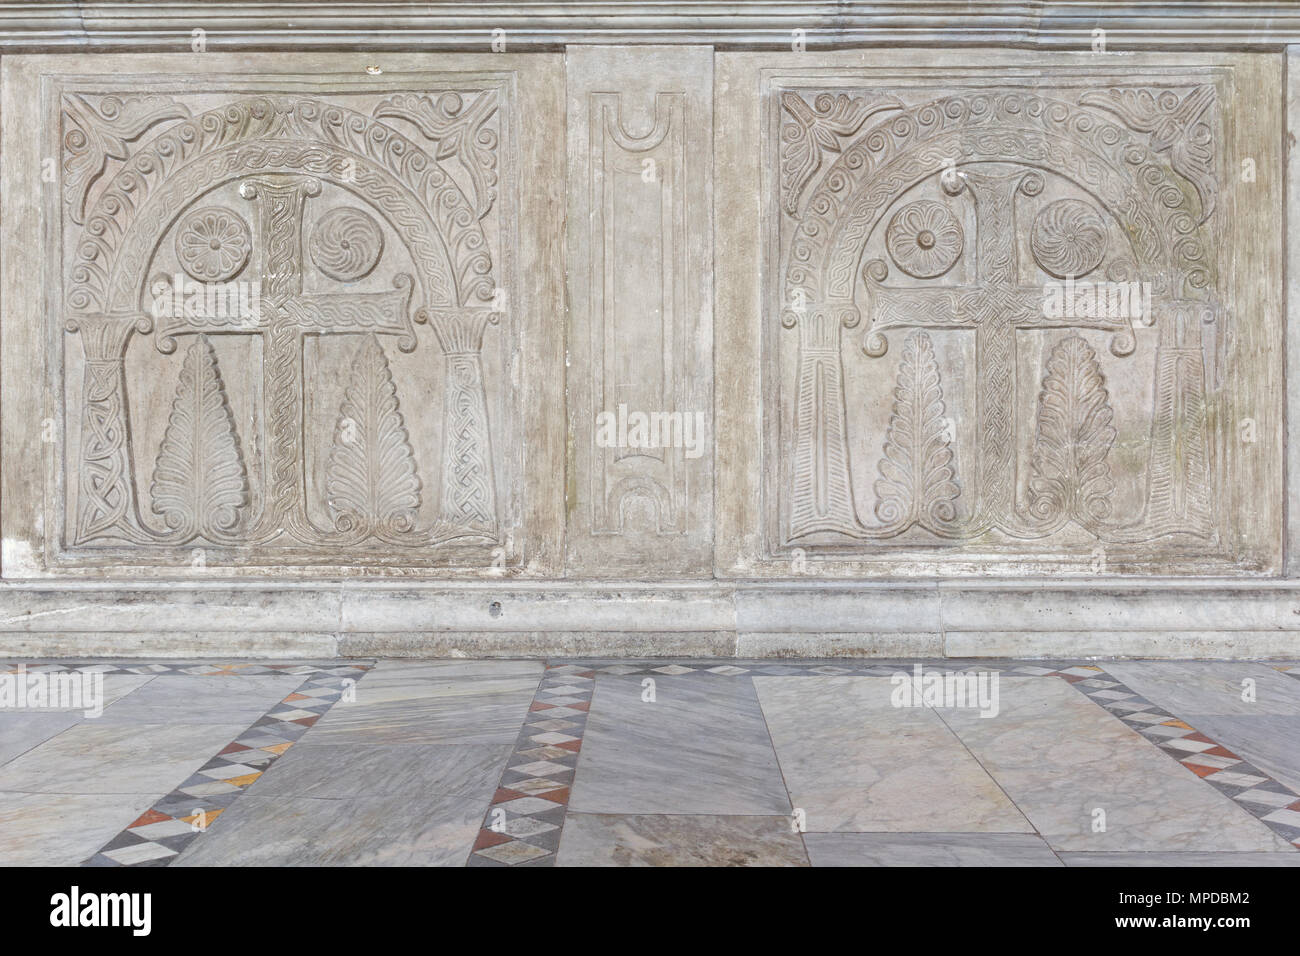 Longobard cross - Ninth century fragments incorporated in the Schola cantorum - Basilica of Santa Sabina - Rome Stock Photo